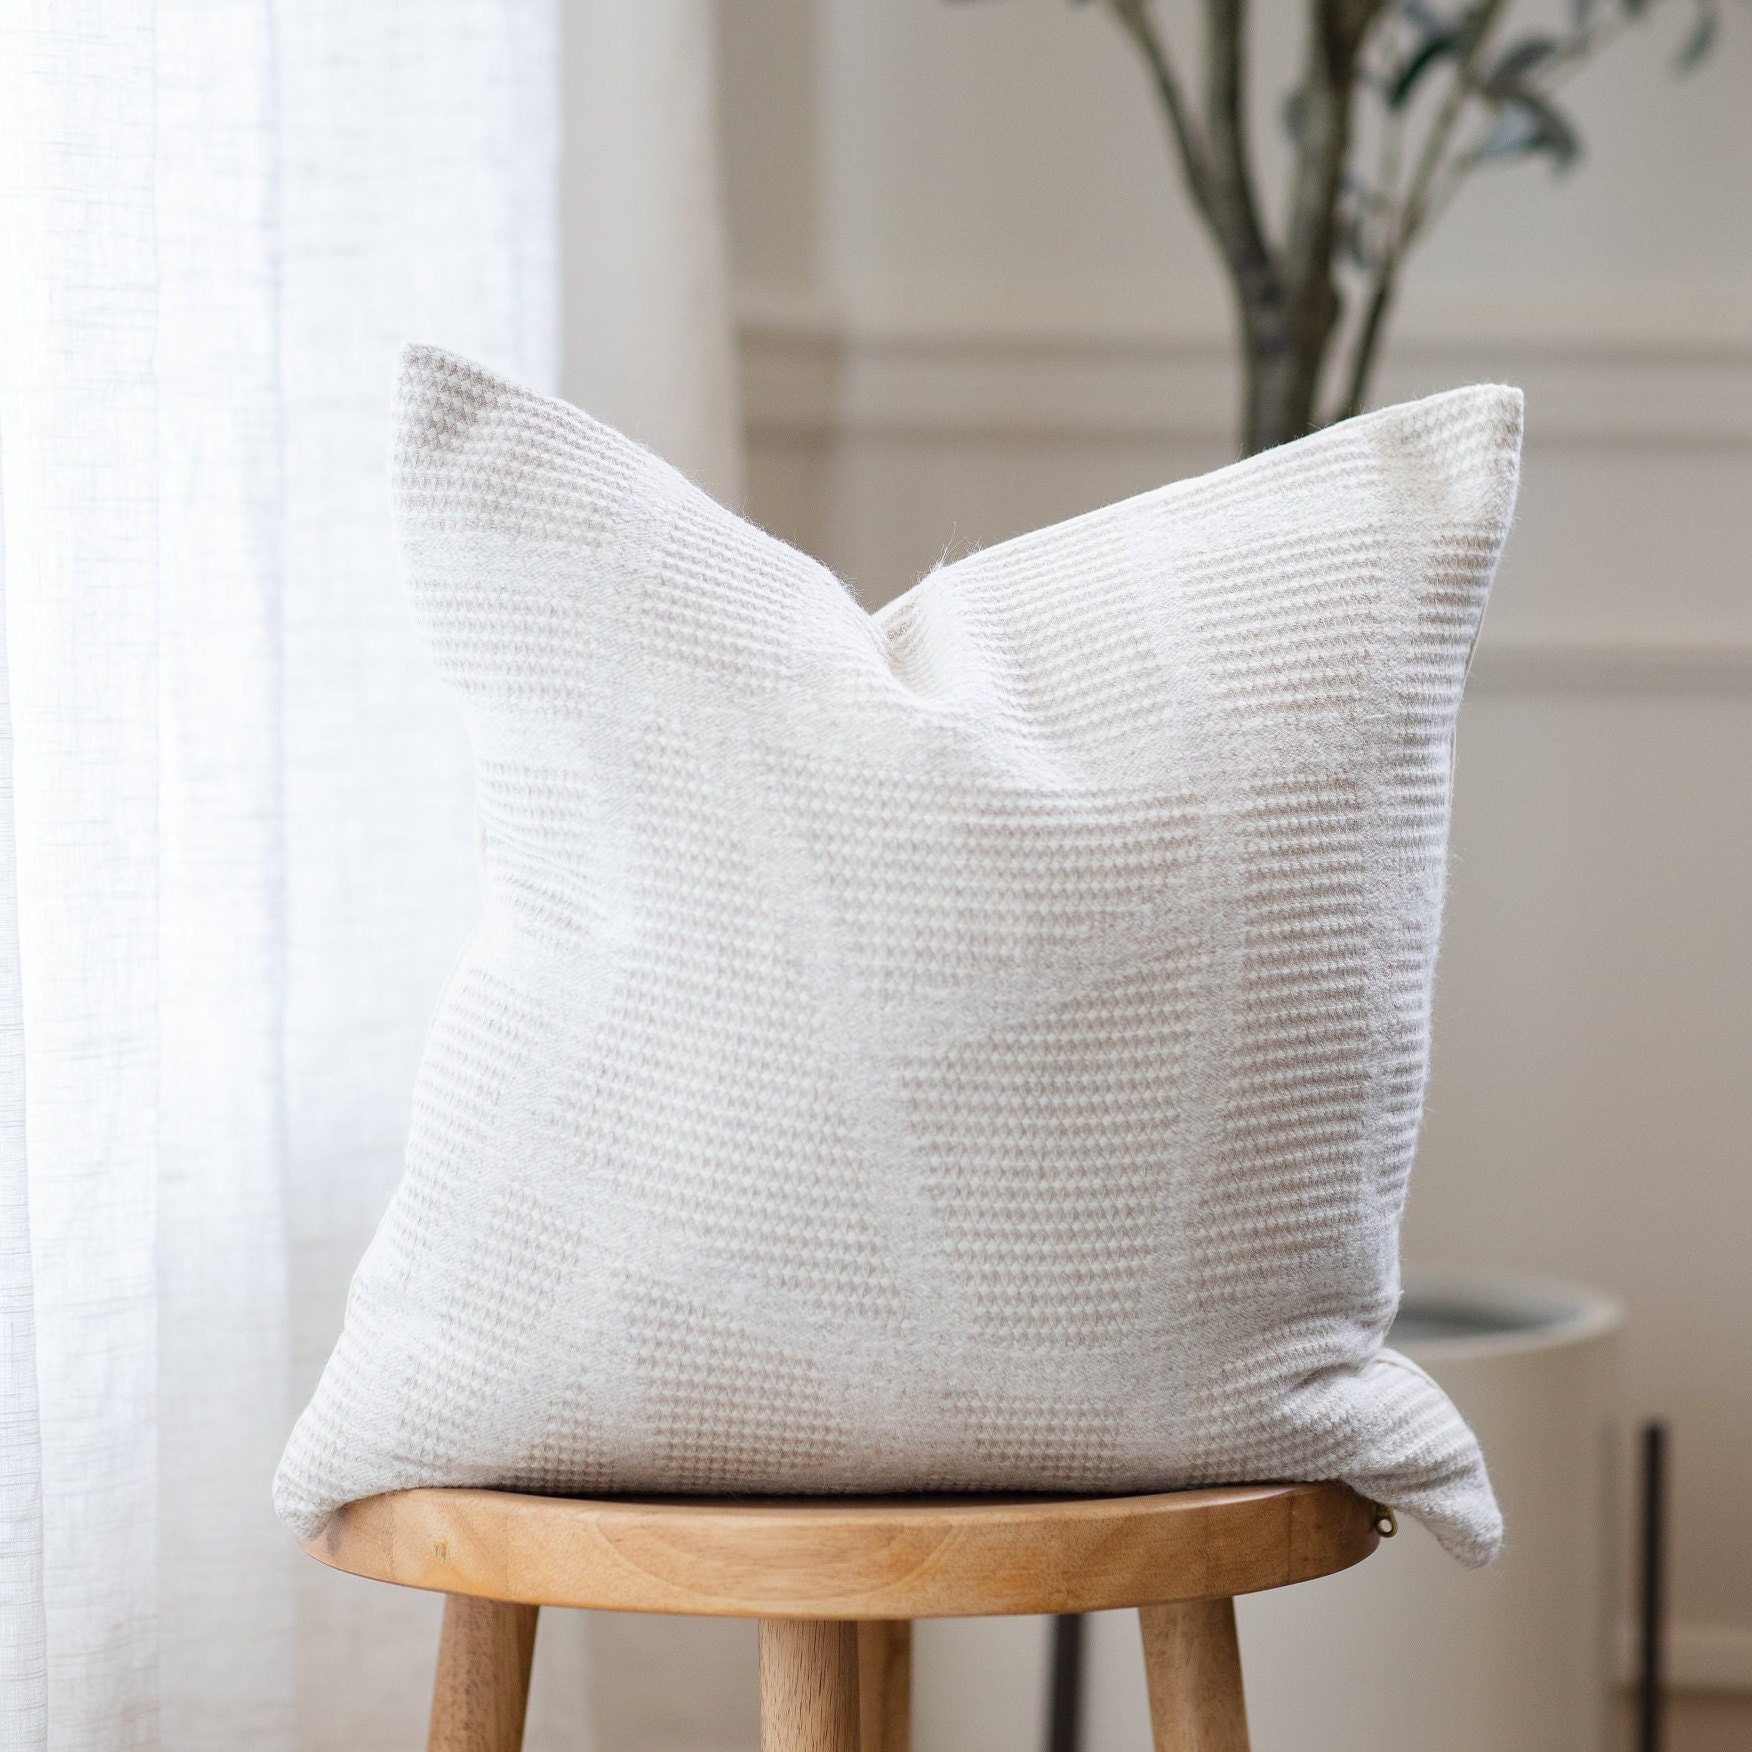 Throw Cushion Cover|Navy Blue & White Euro Sham Pillow for Bed or Sofa 100% Cotton Modern Pattern | 18 x 18 | Saffron Marigold